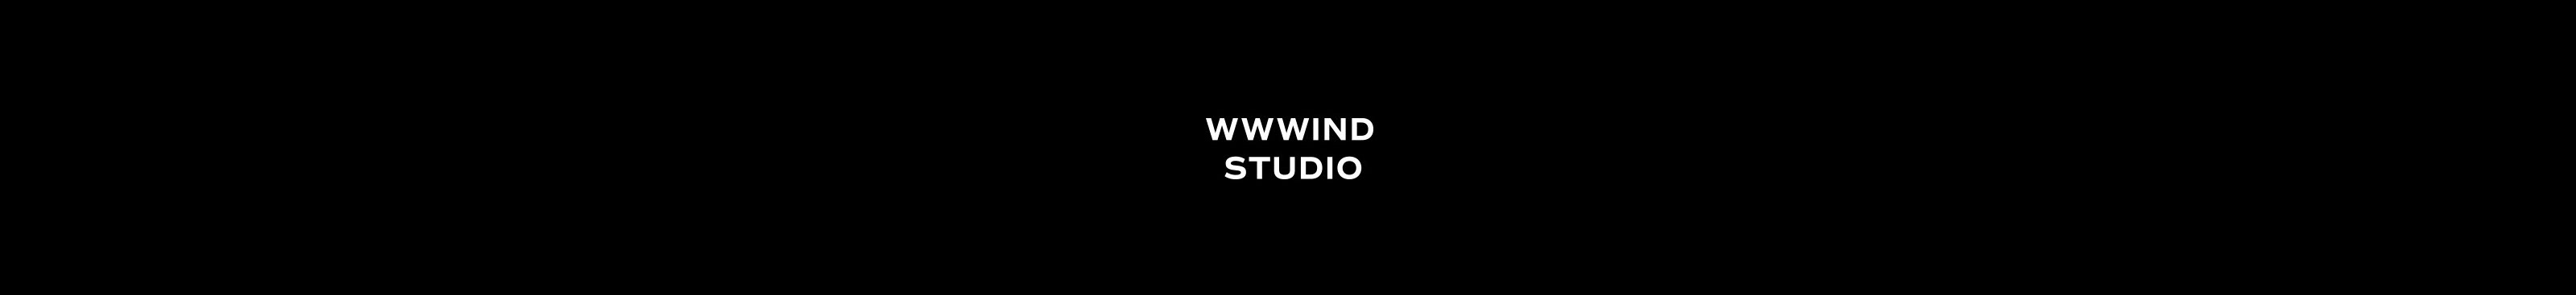 wwwind Studio's profile banner